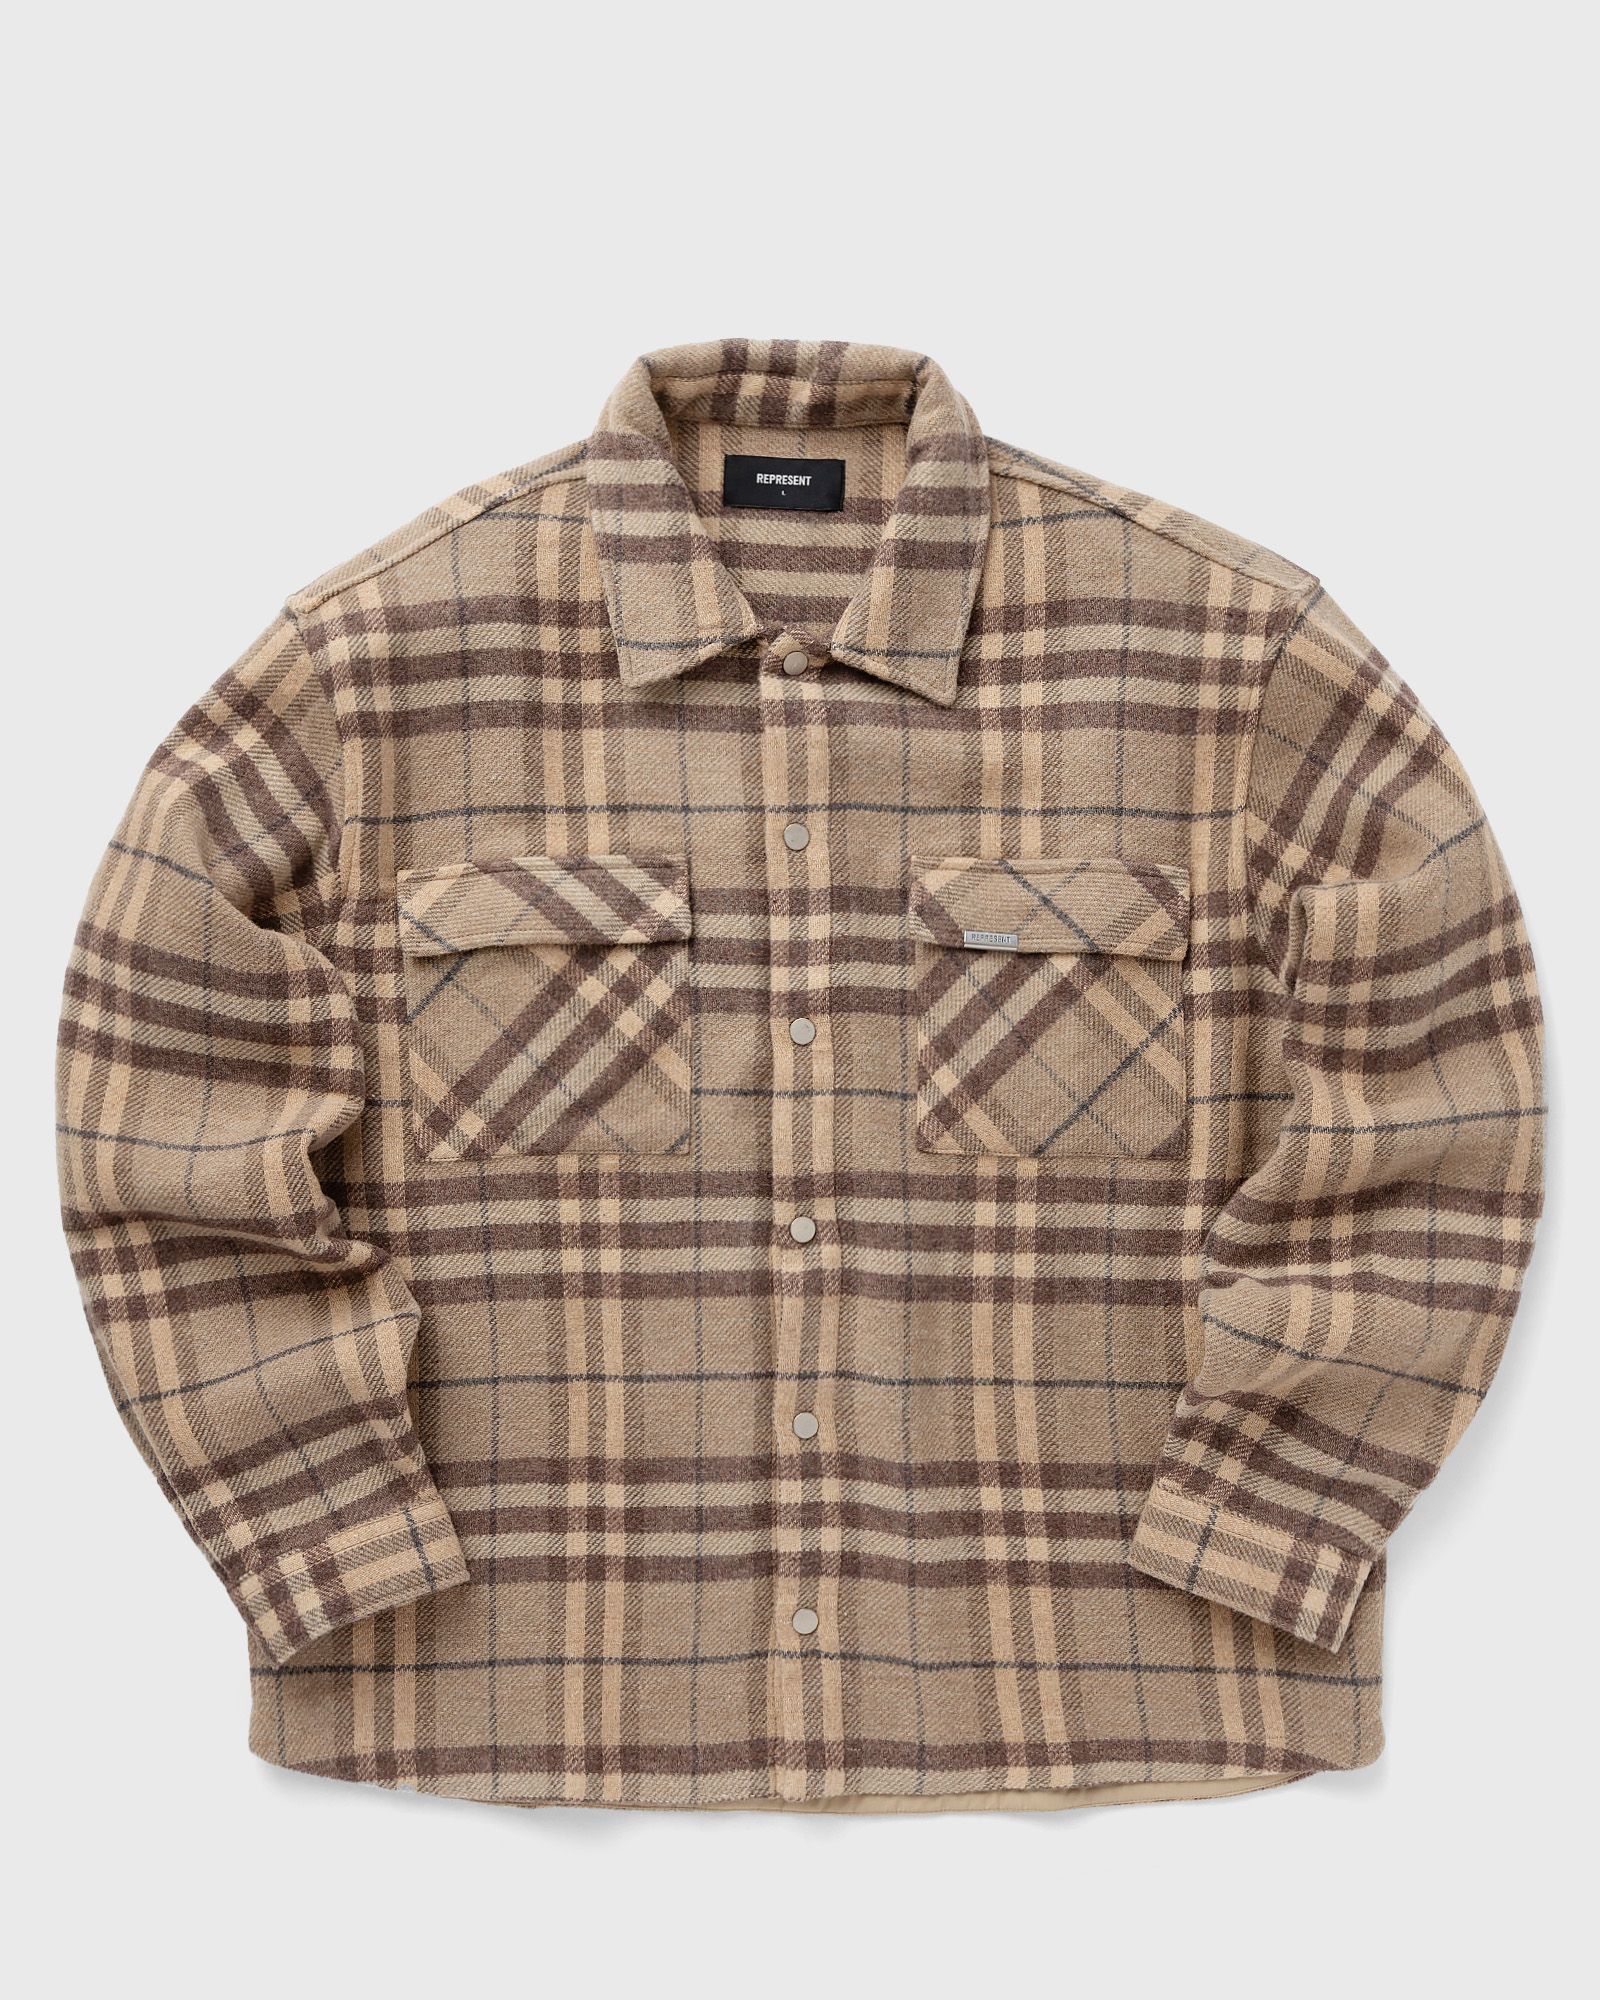 Represent - intial print flannel shirt men overshirts brown in größe:m